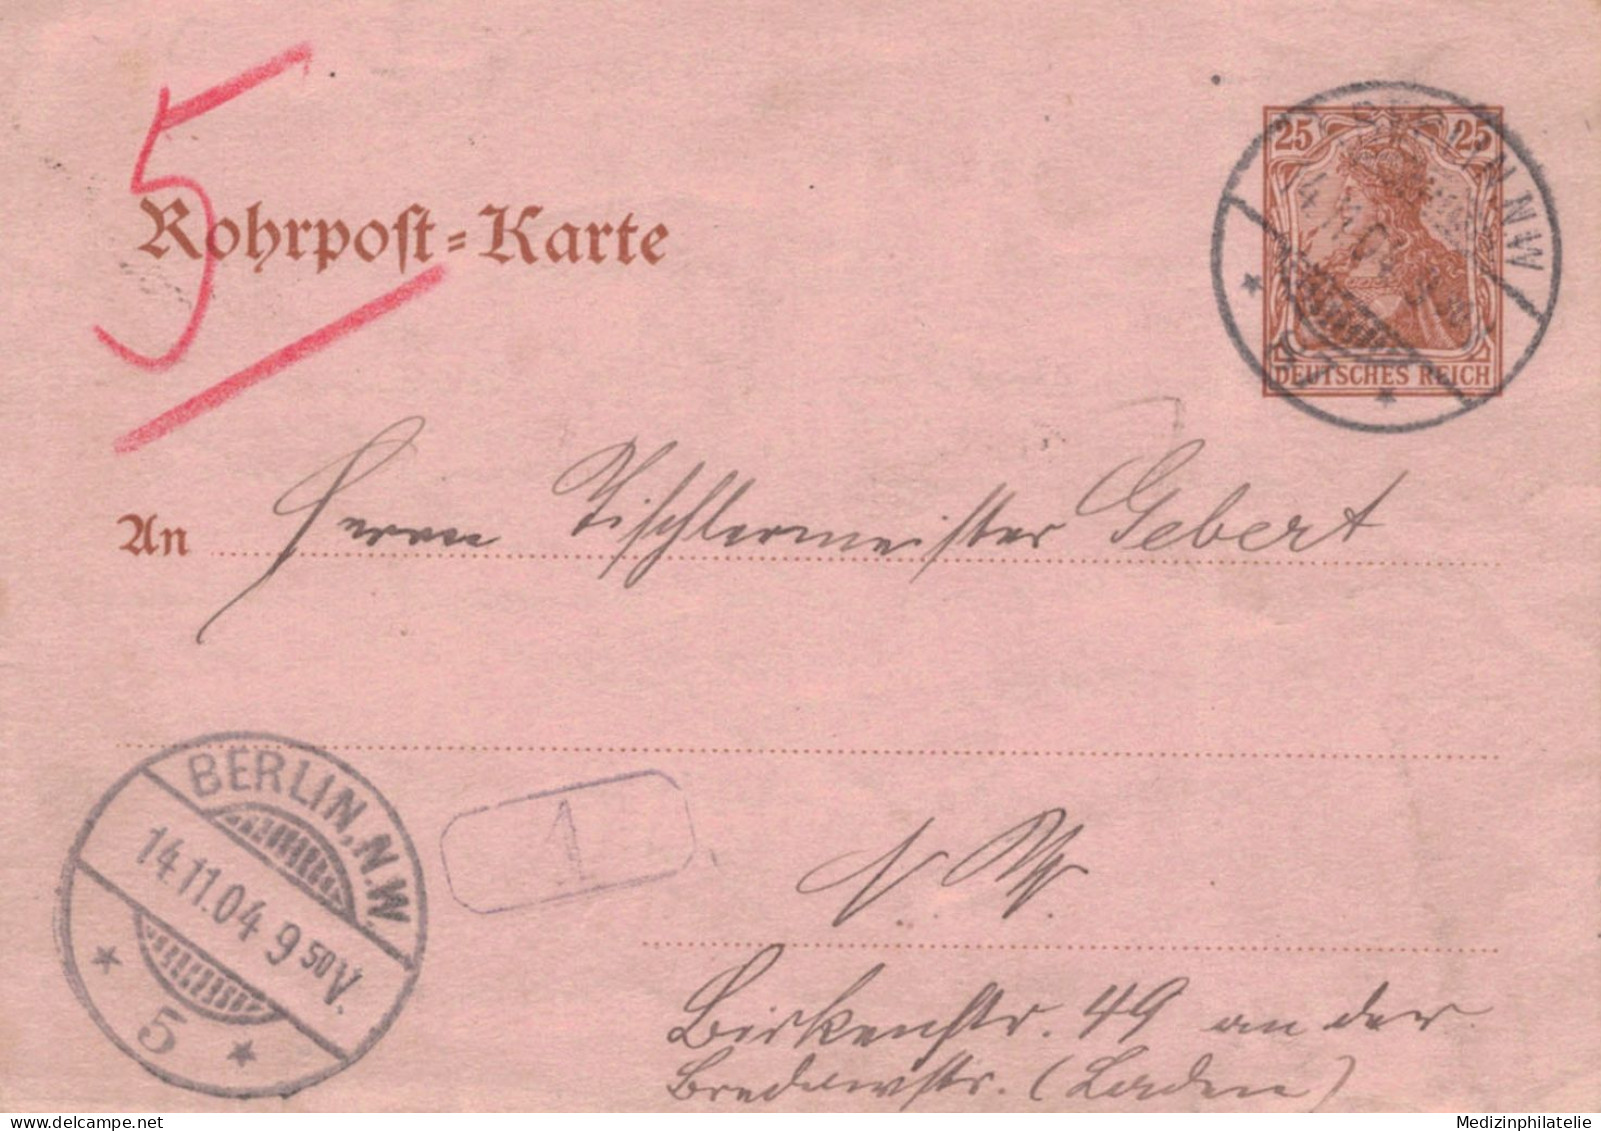 Rohrpost-Karte 25 Pf. Germania - Berlin 87 1904 > 5 09:50 - Postkarten